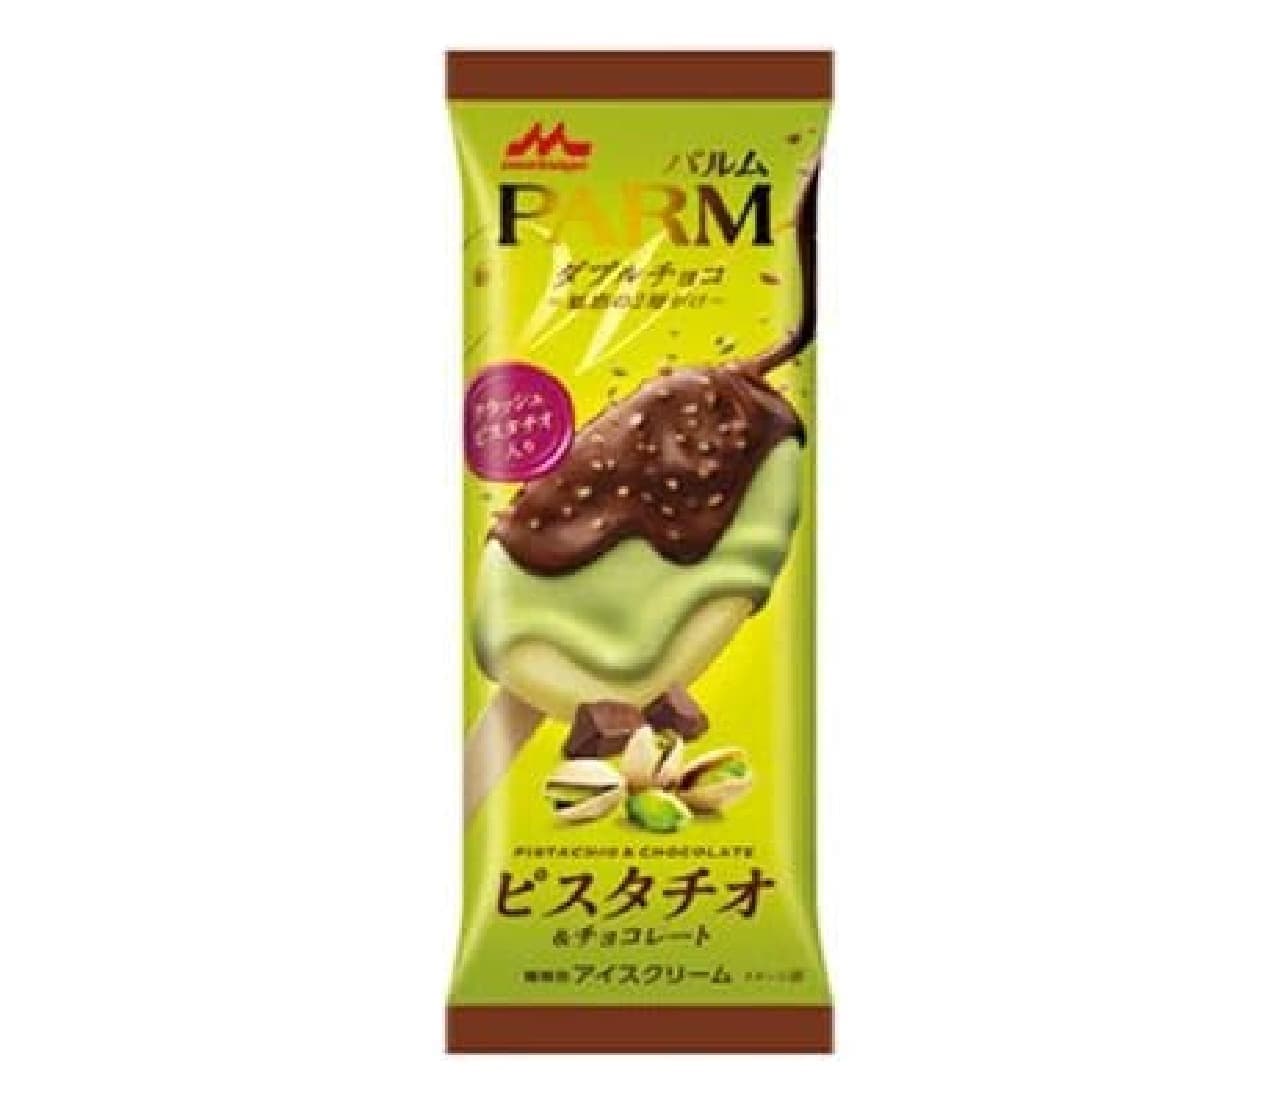 Morinaga Milk Industry "PARM Double Chocolate Pistachio & Chocolate